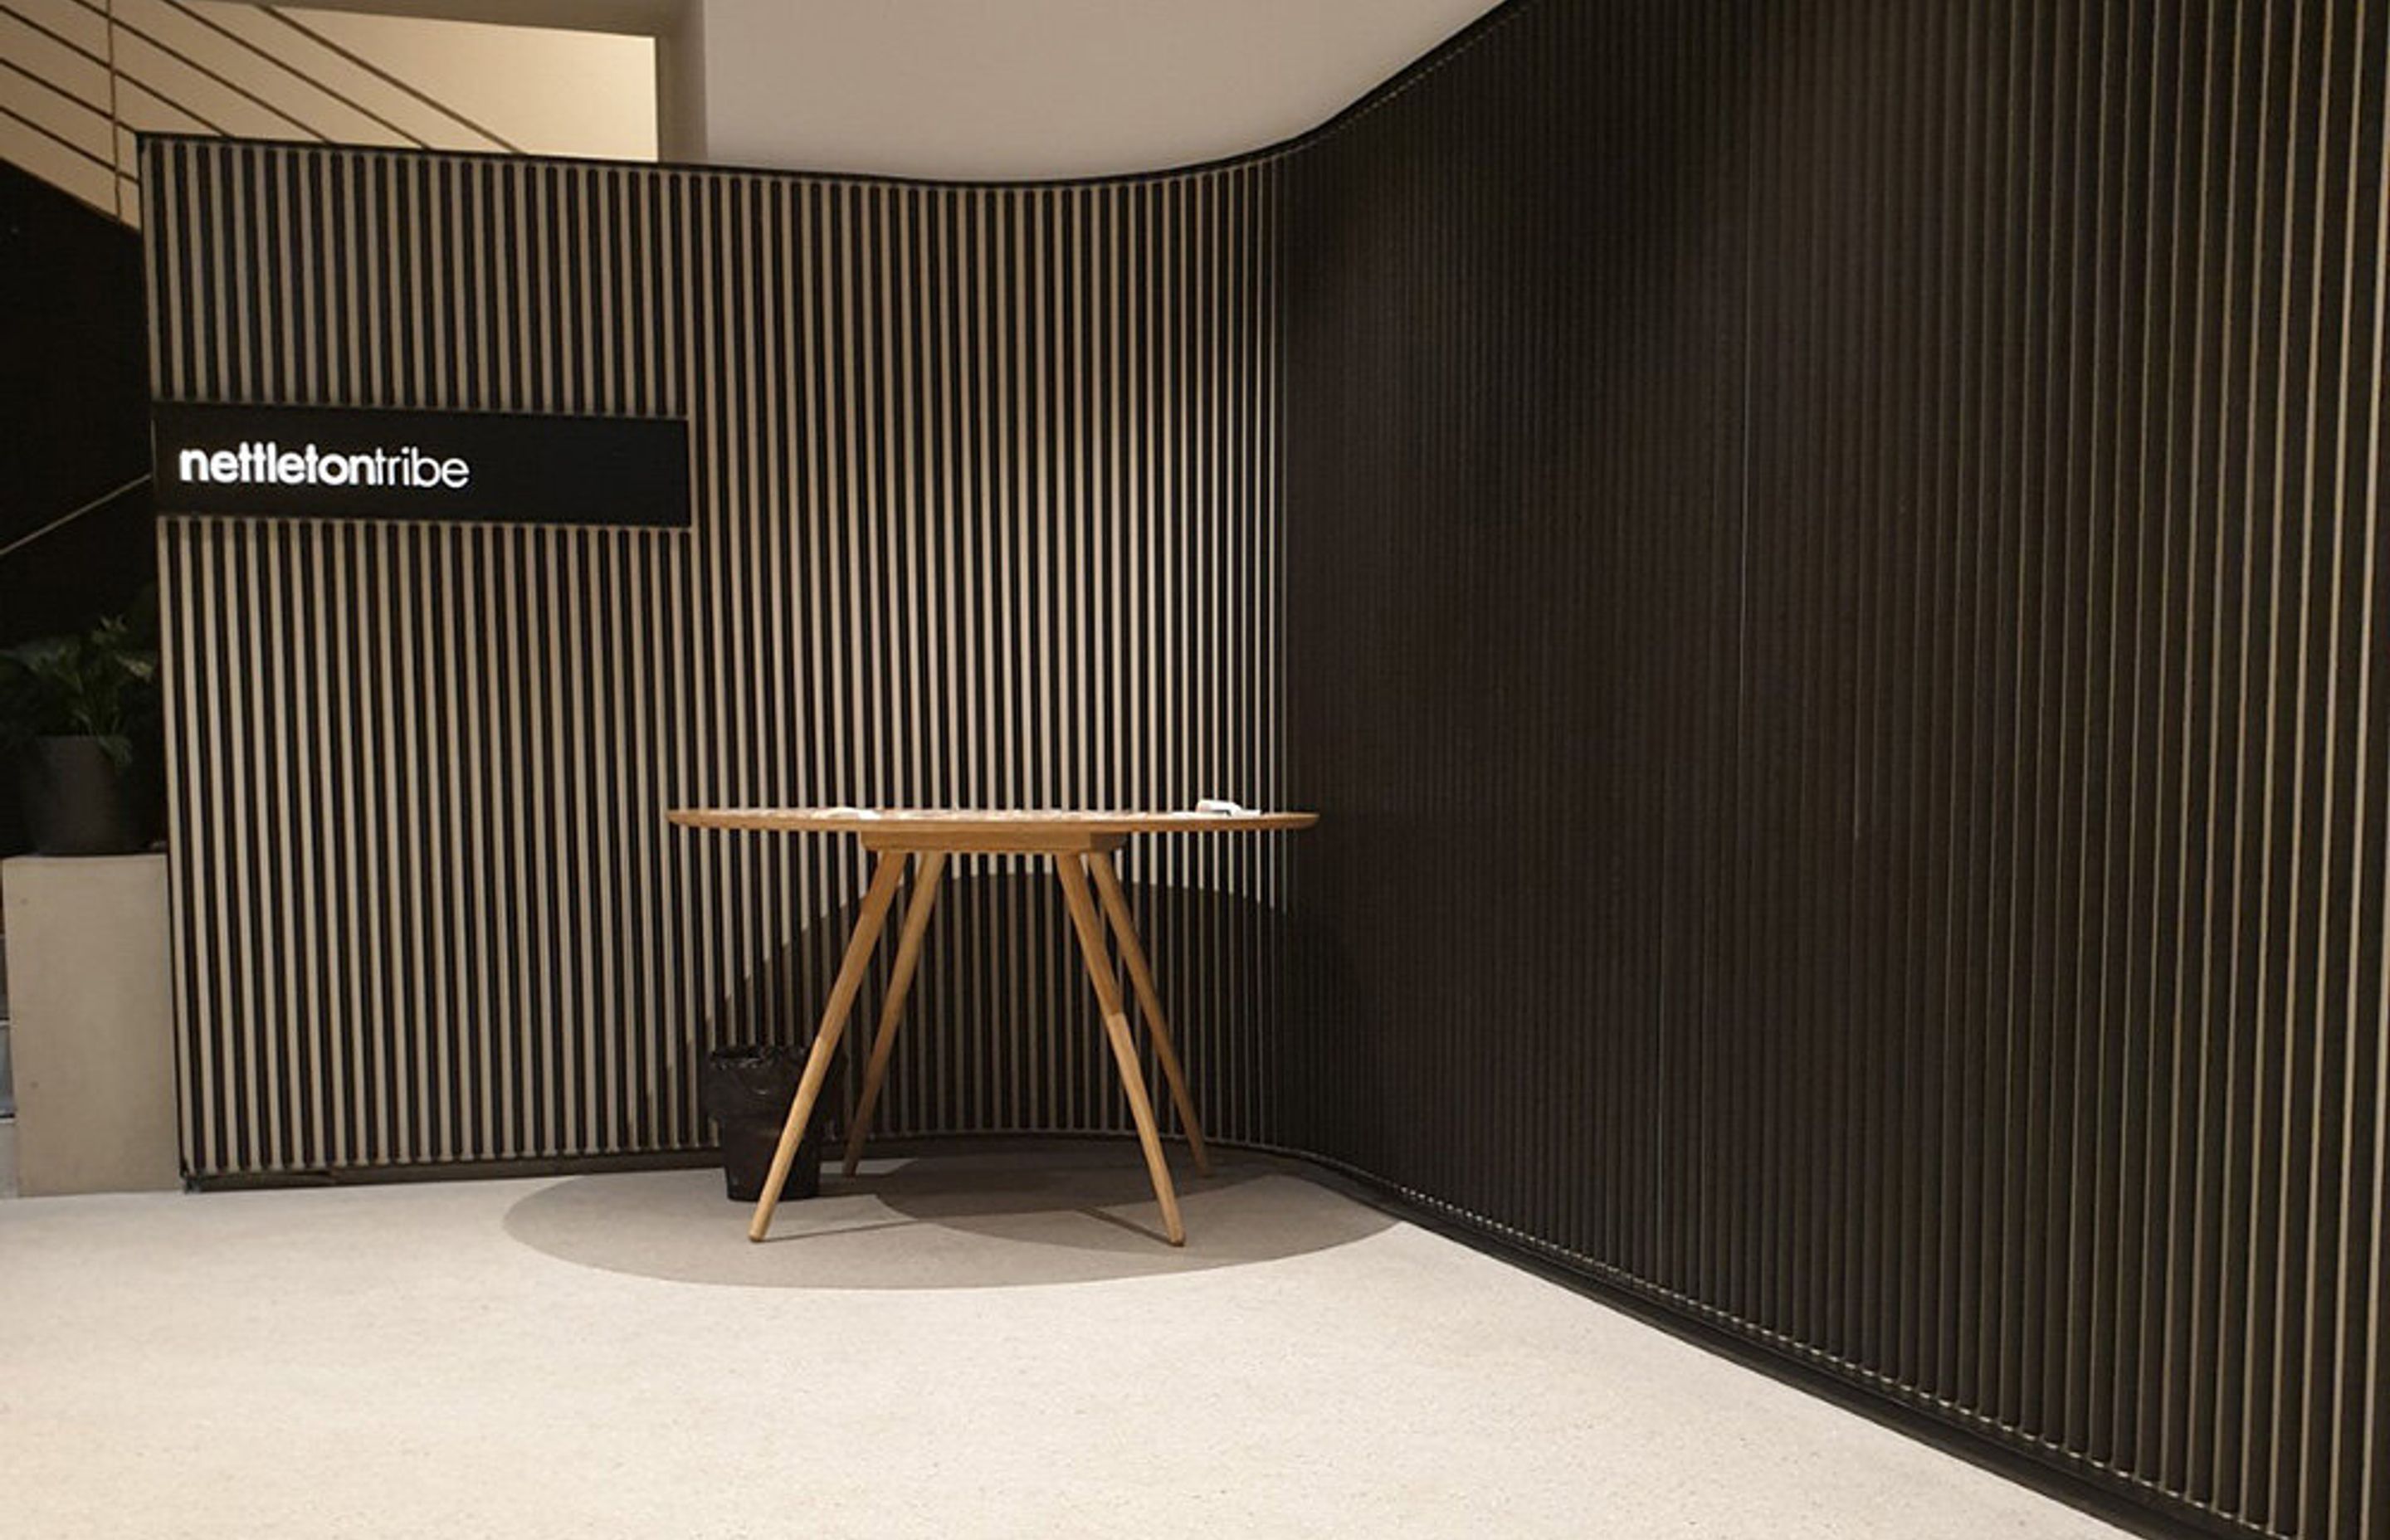 Covet Products Showcase Nettletontribe’s Design Capabilities: Ground-Floor Lobby